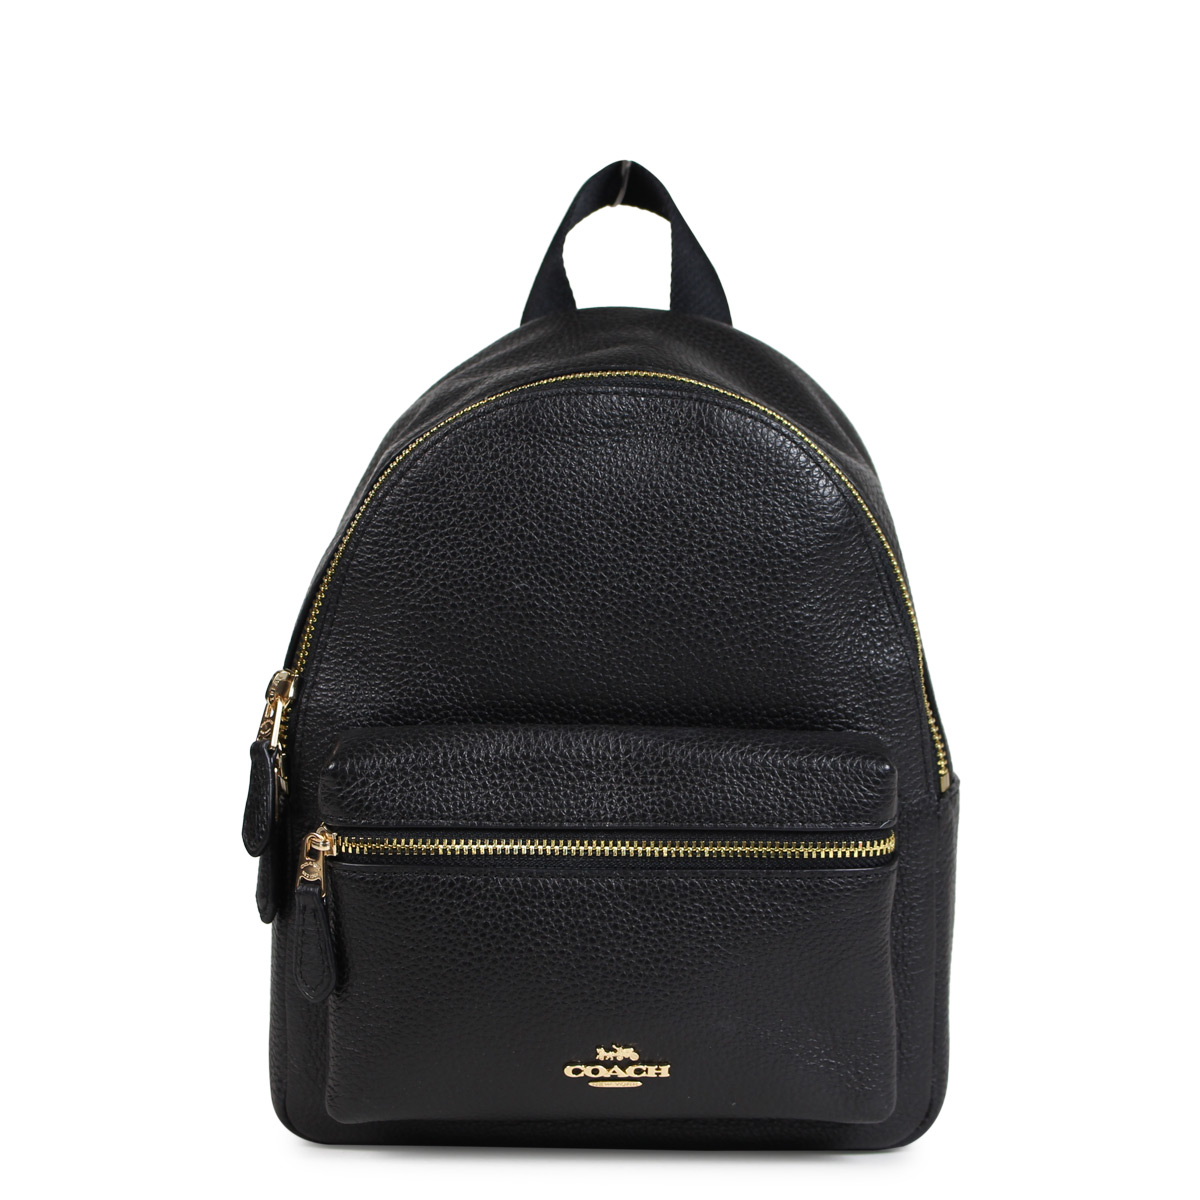 ALLSPORTS: COACH F28995 coach bag rucksack backpack Lady&#39;s leather black | Rakuten Global Market